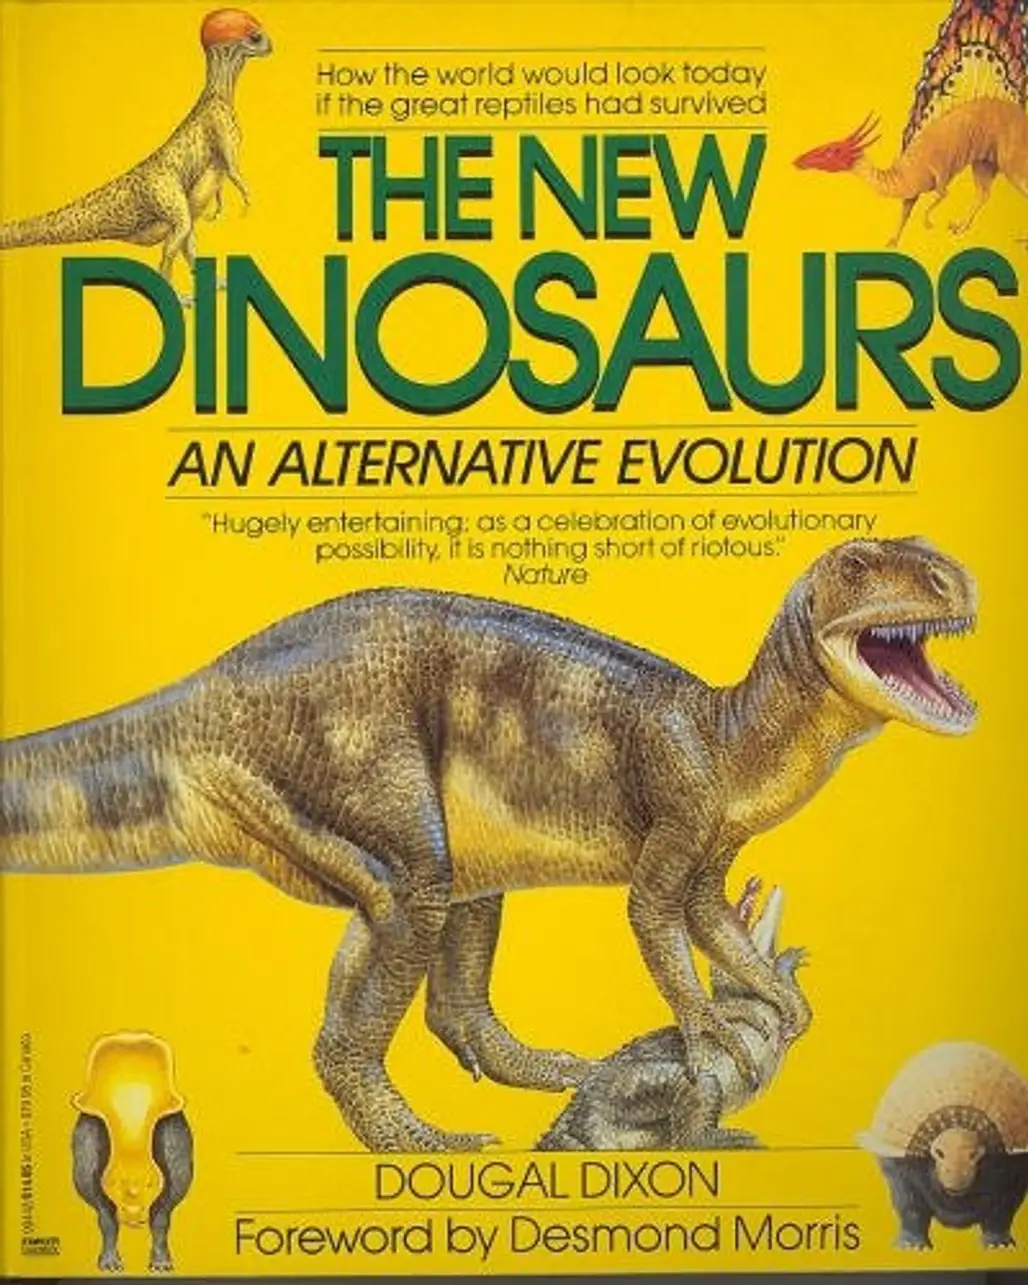 The New Dinosaurs: an Alternative Evolution (Dougal Dixon)